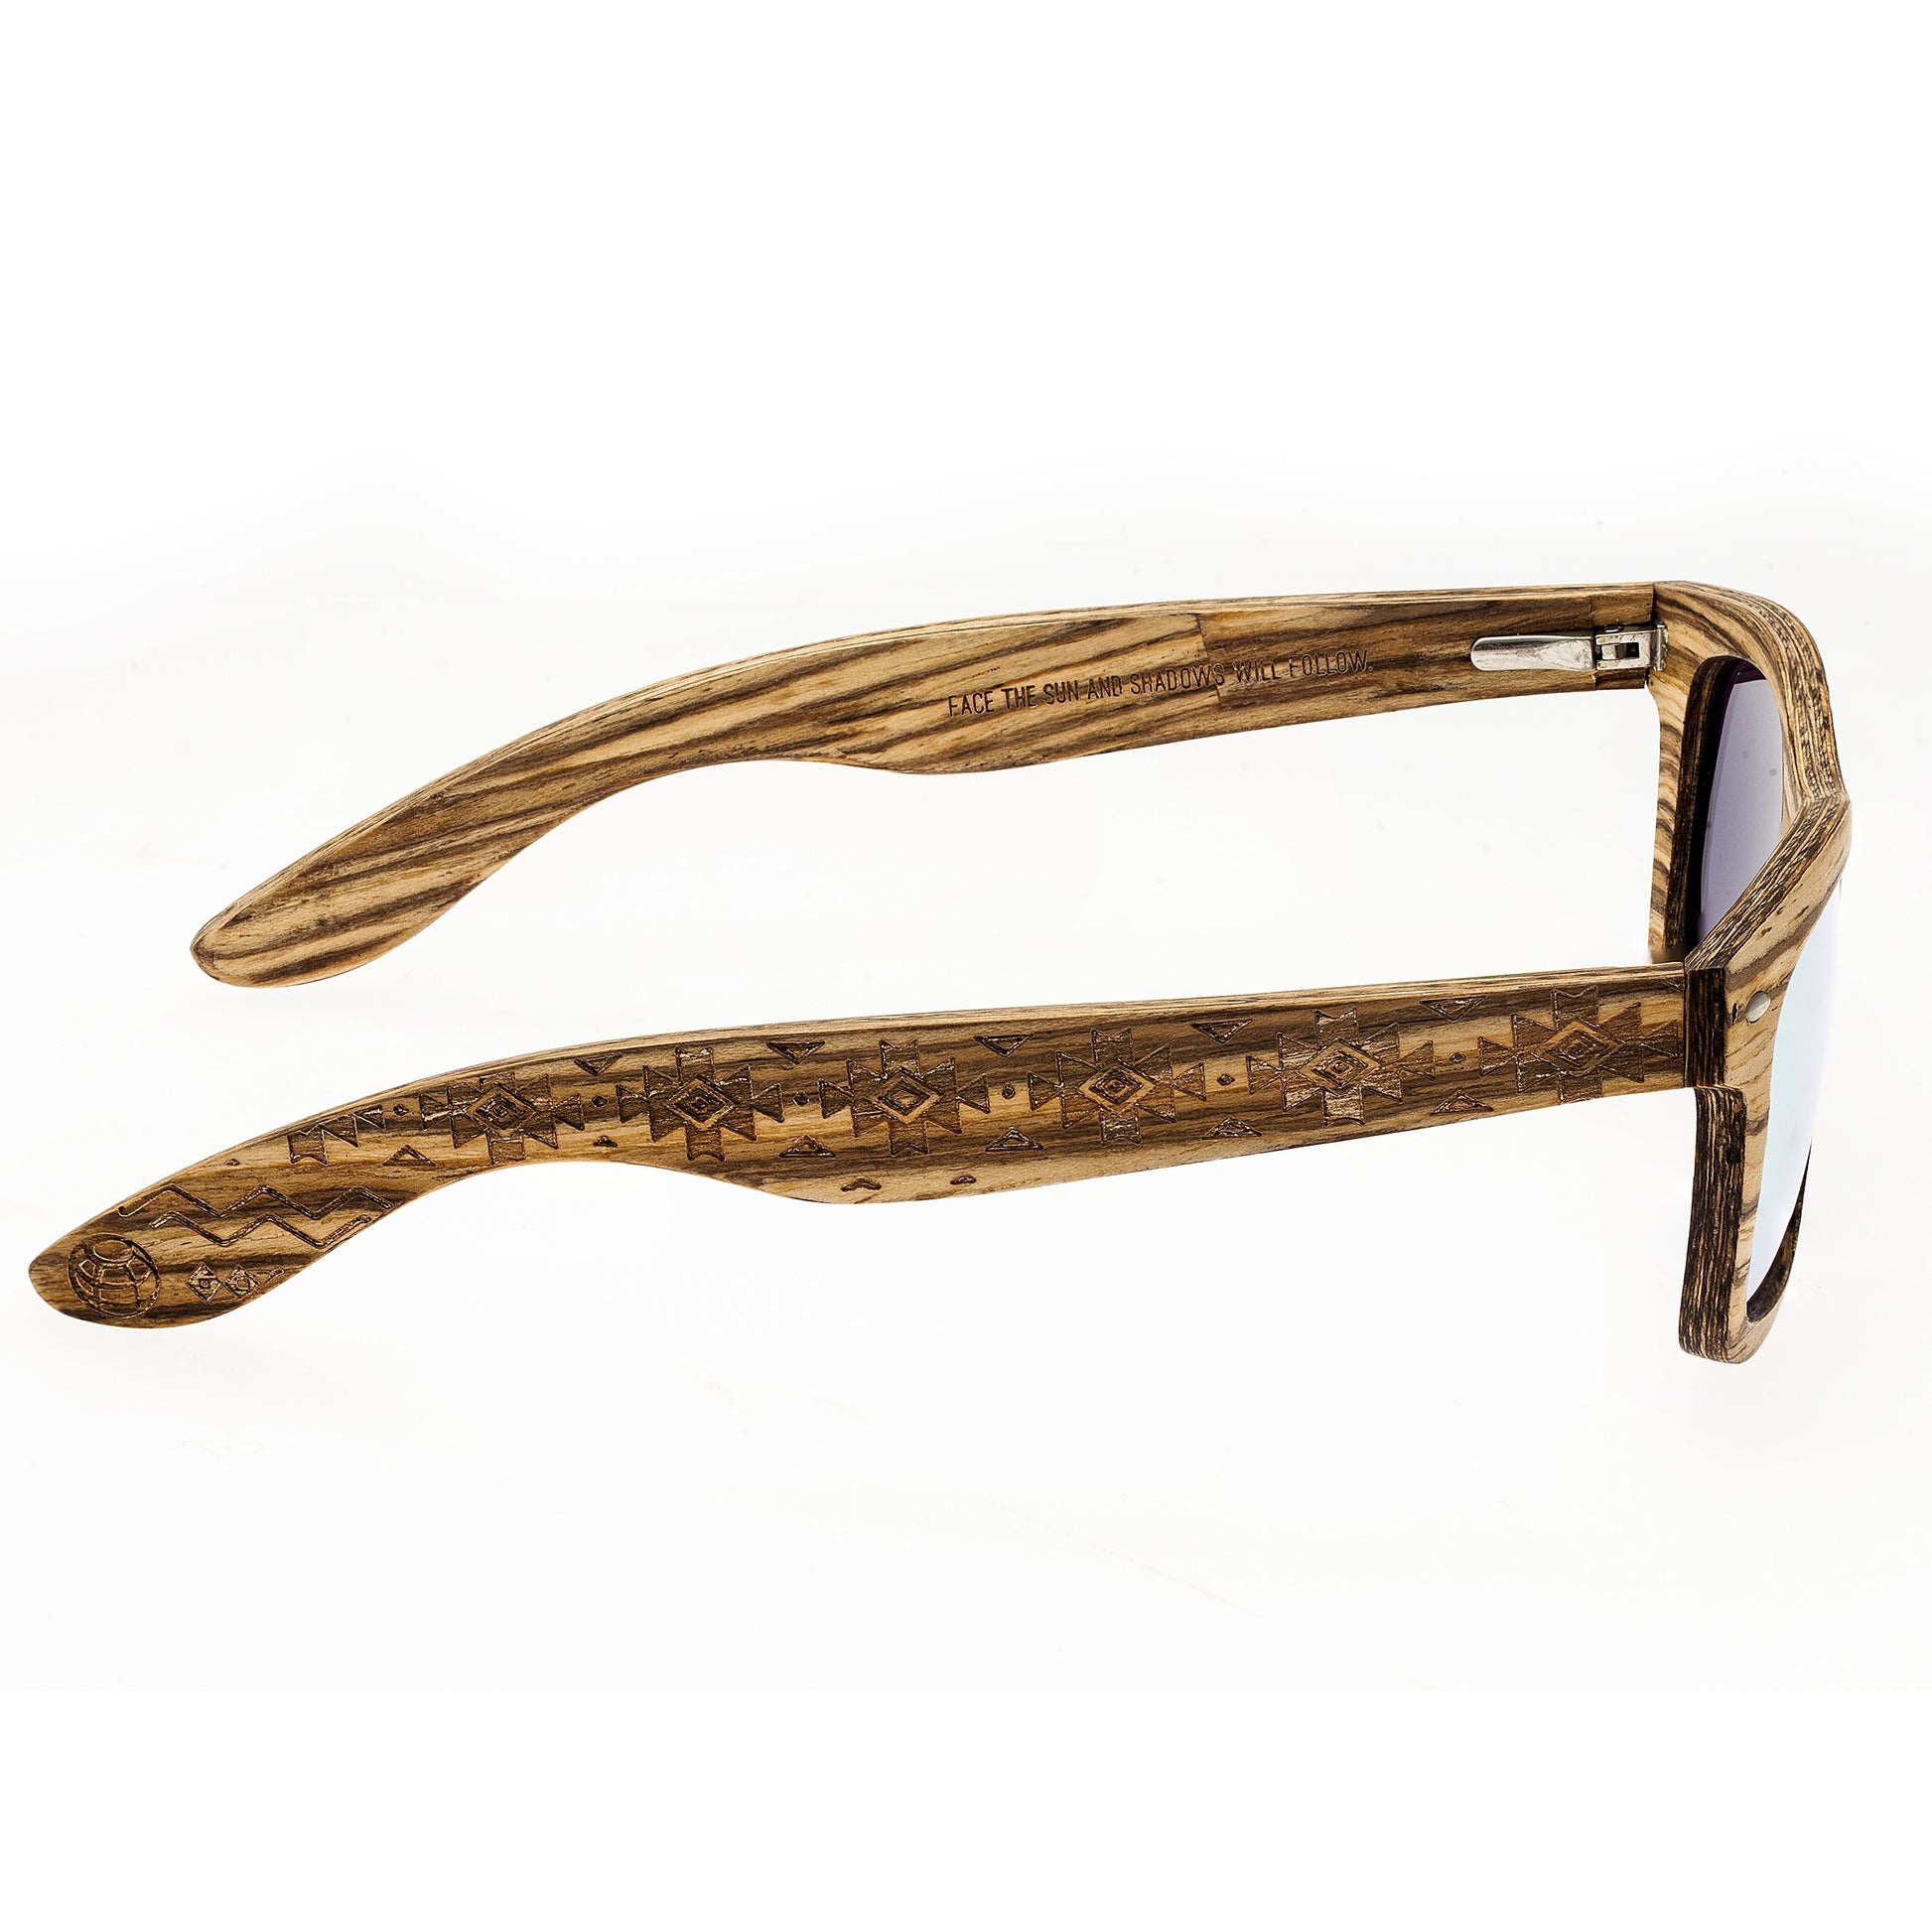 Earth Wood Maya Polarized Sunglasses - Zebrawood/Yellow - ESG005Z